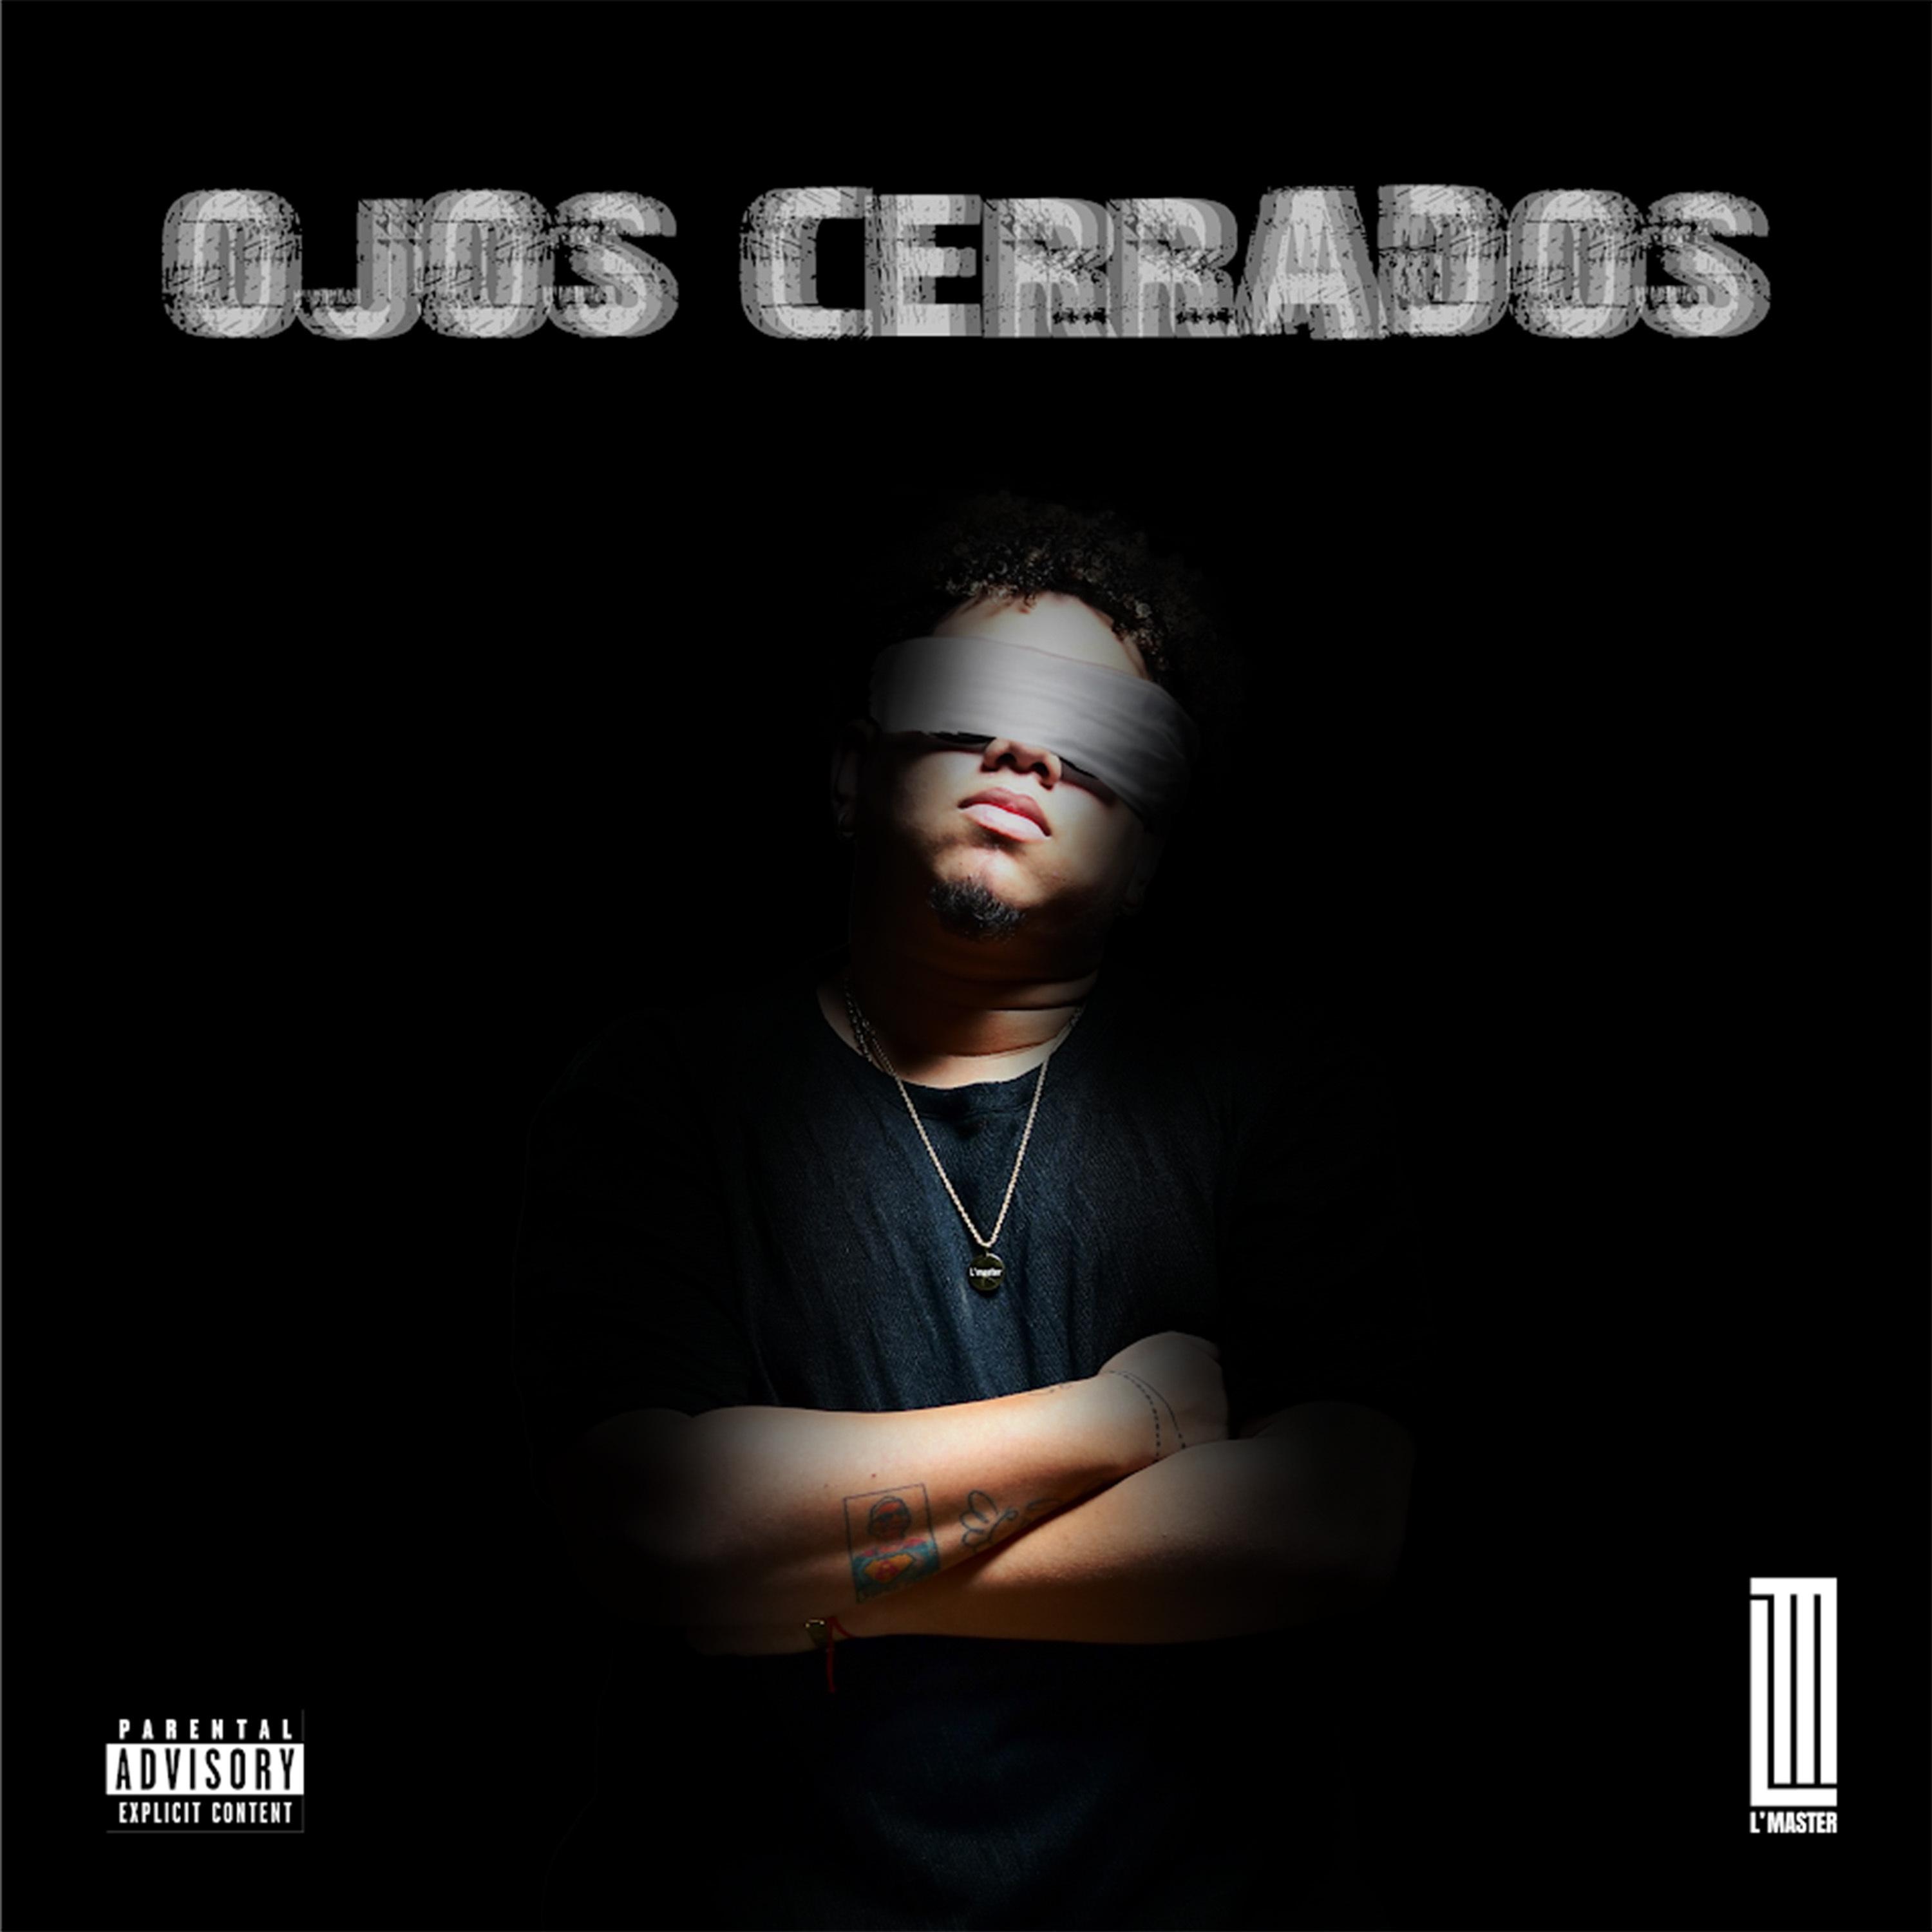 Постер альбома Ojos Cerrados